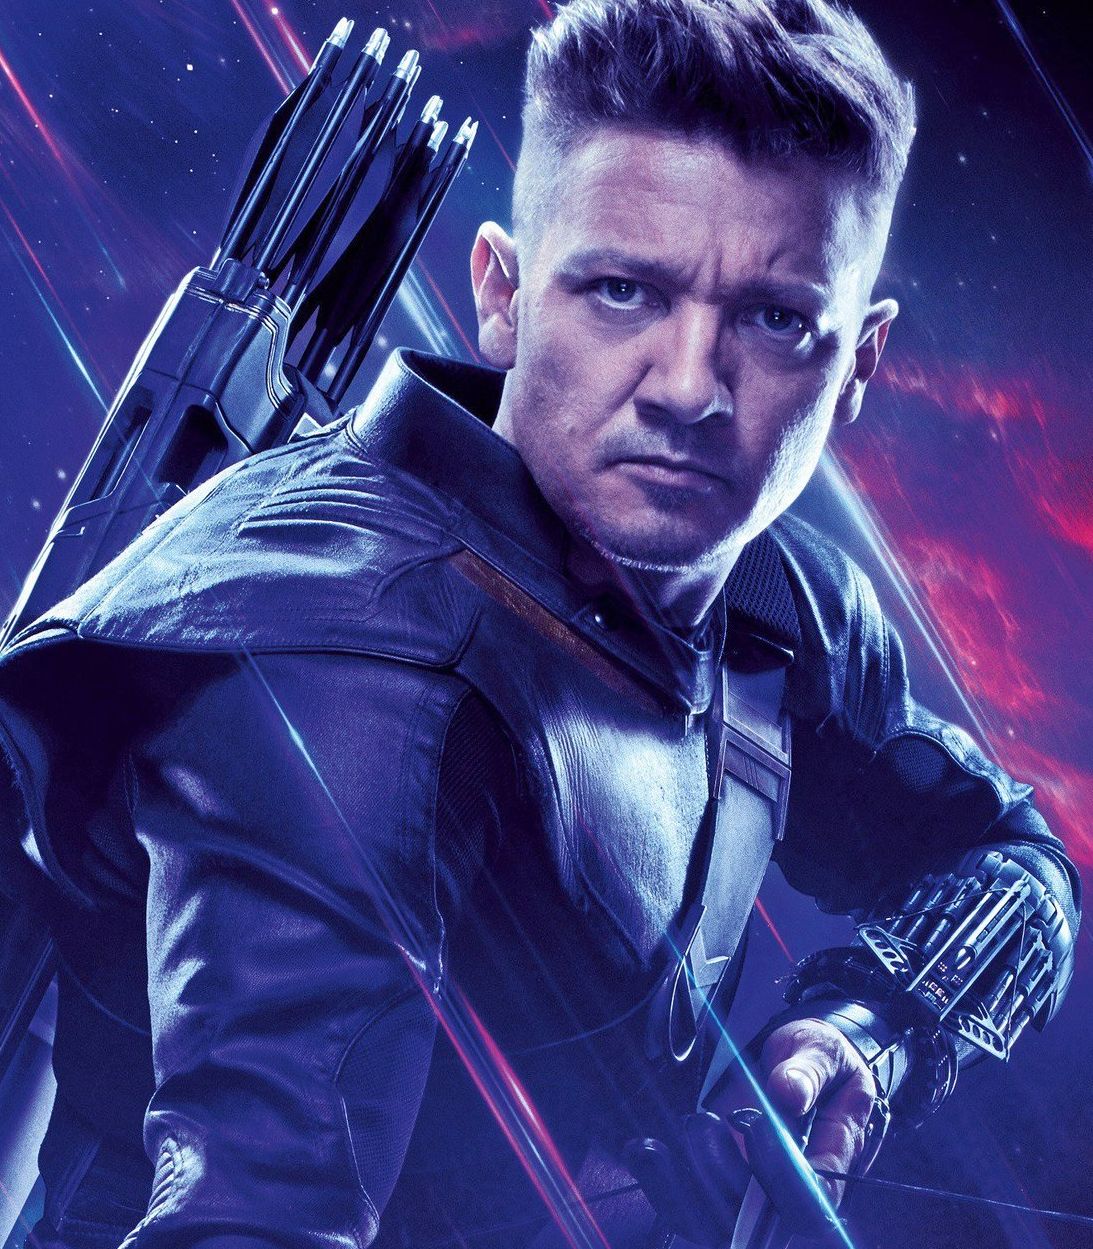 Jeremy Renner as Ronin Hawkeye in Avengers Endgame Poster